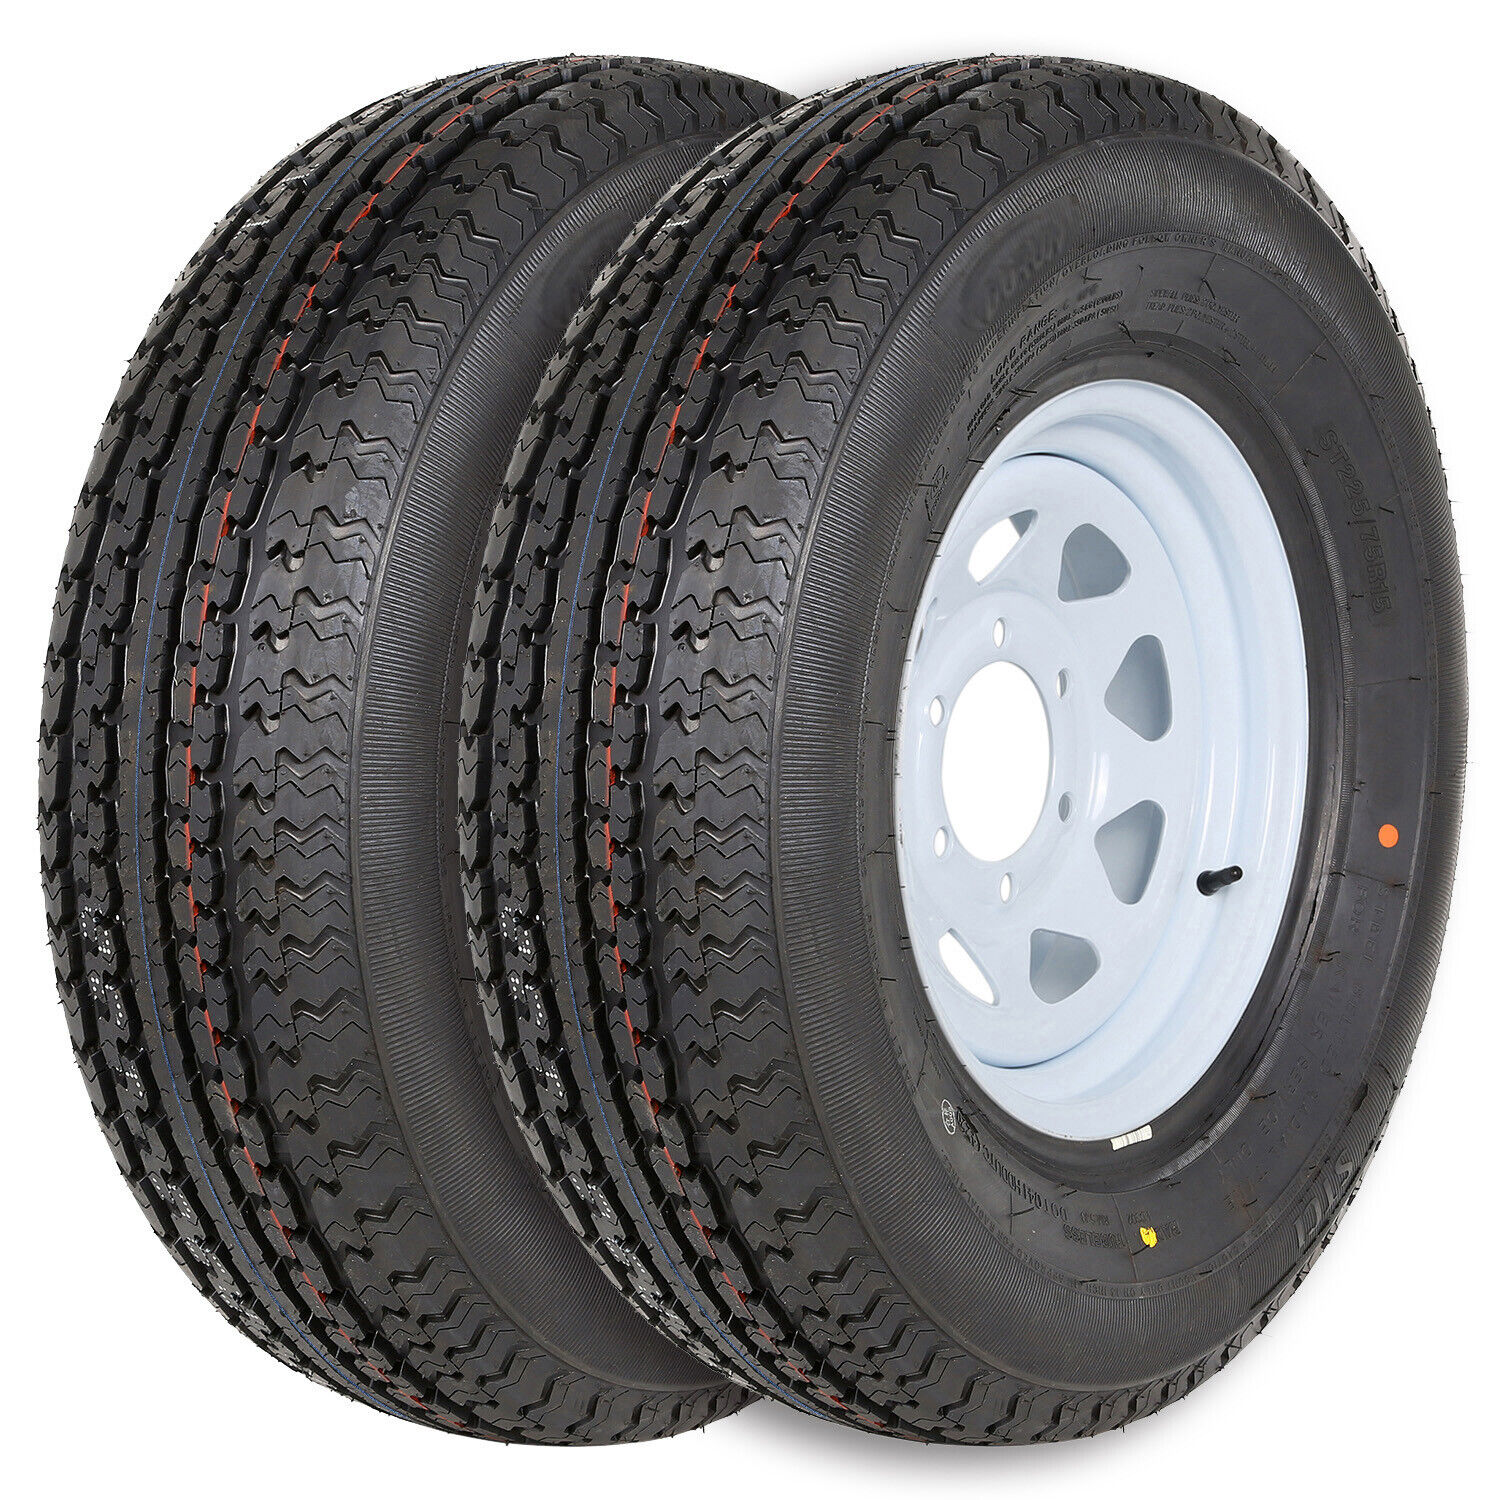 WEIZE ST225/75R15 Trailer Tire with Rim 225/75-15 6 Lug Load Range E Spoke Wheel